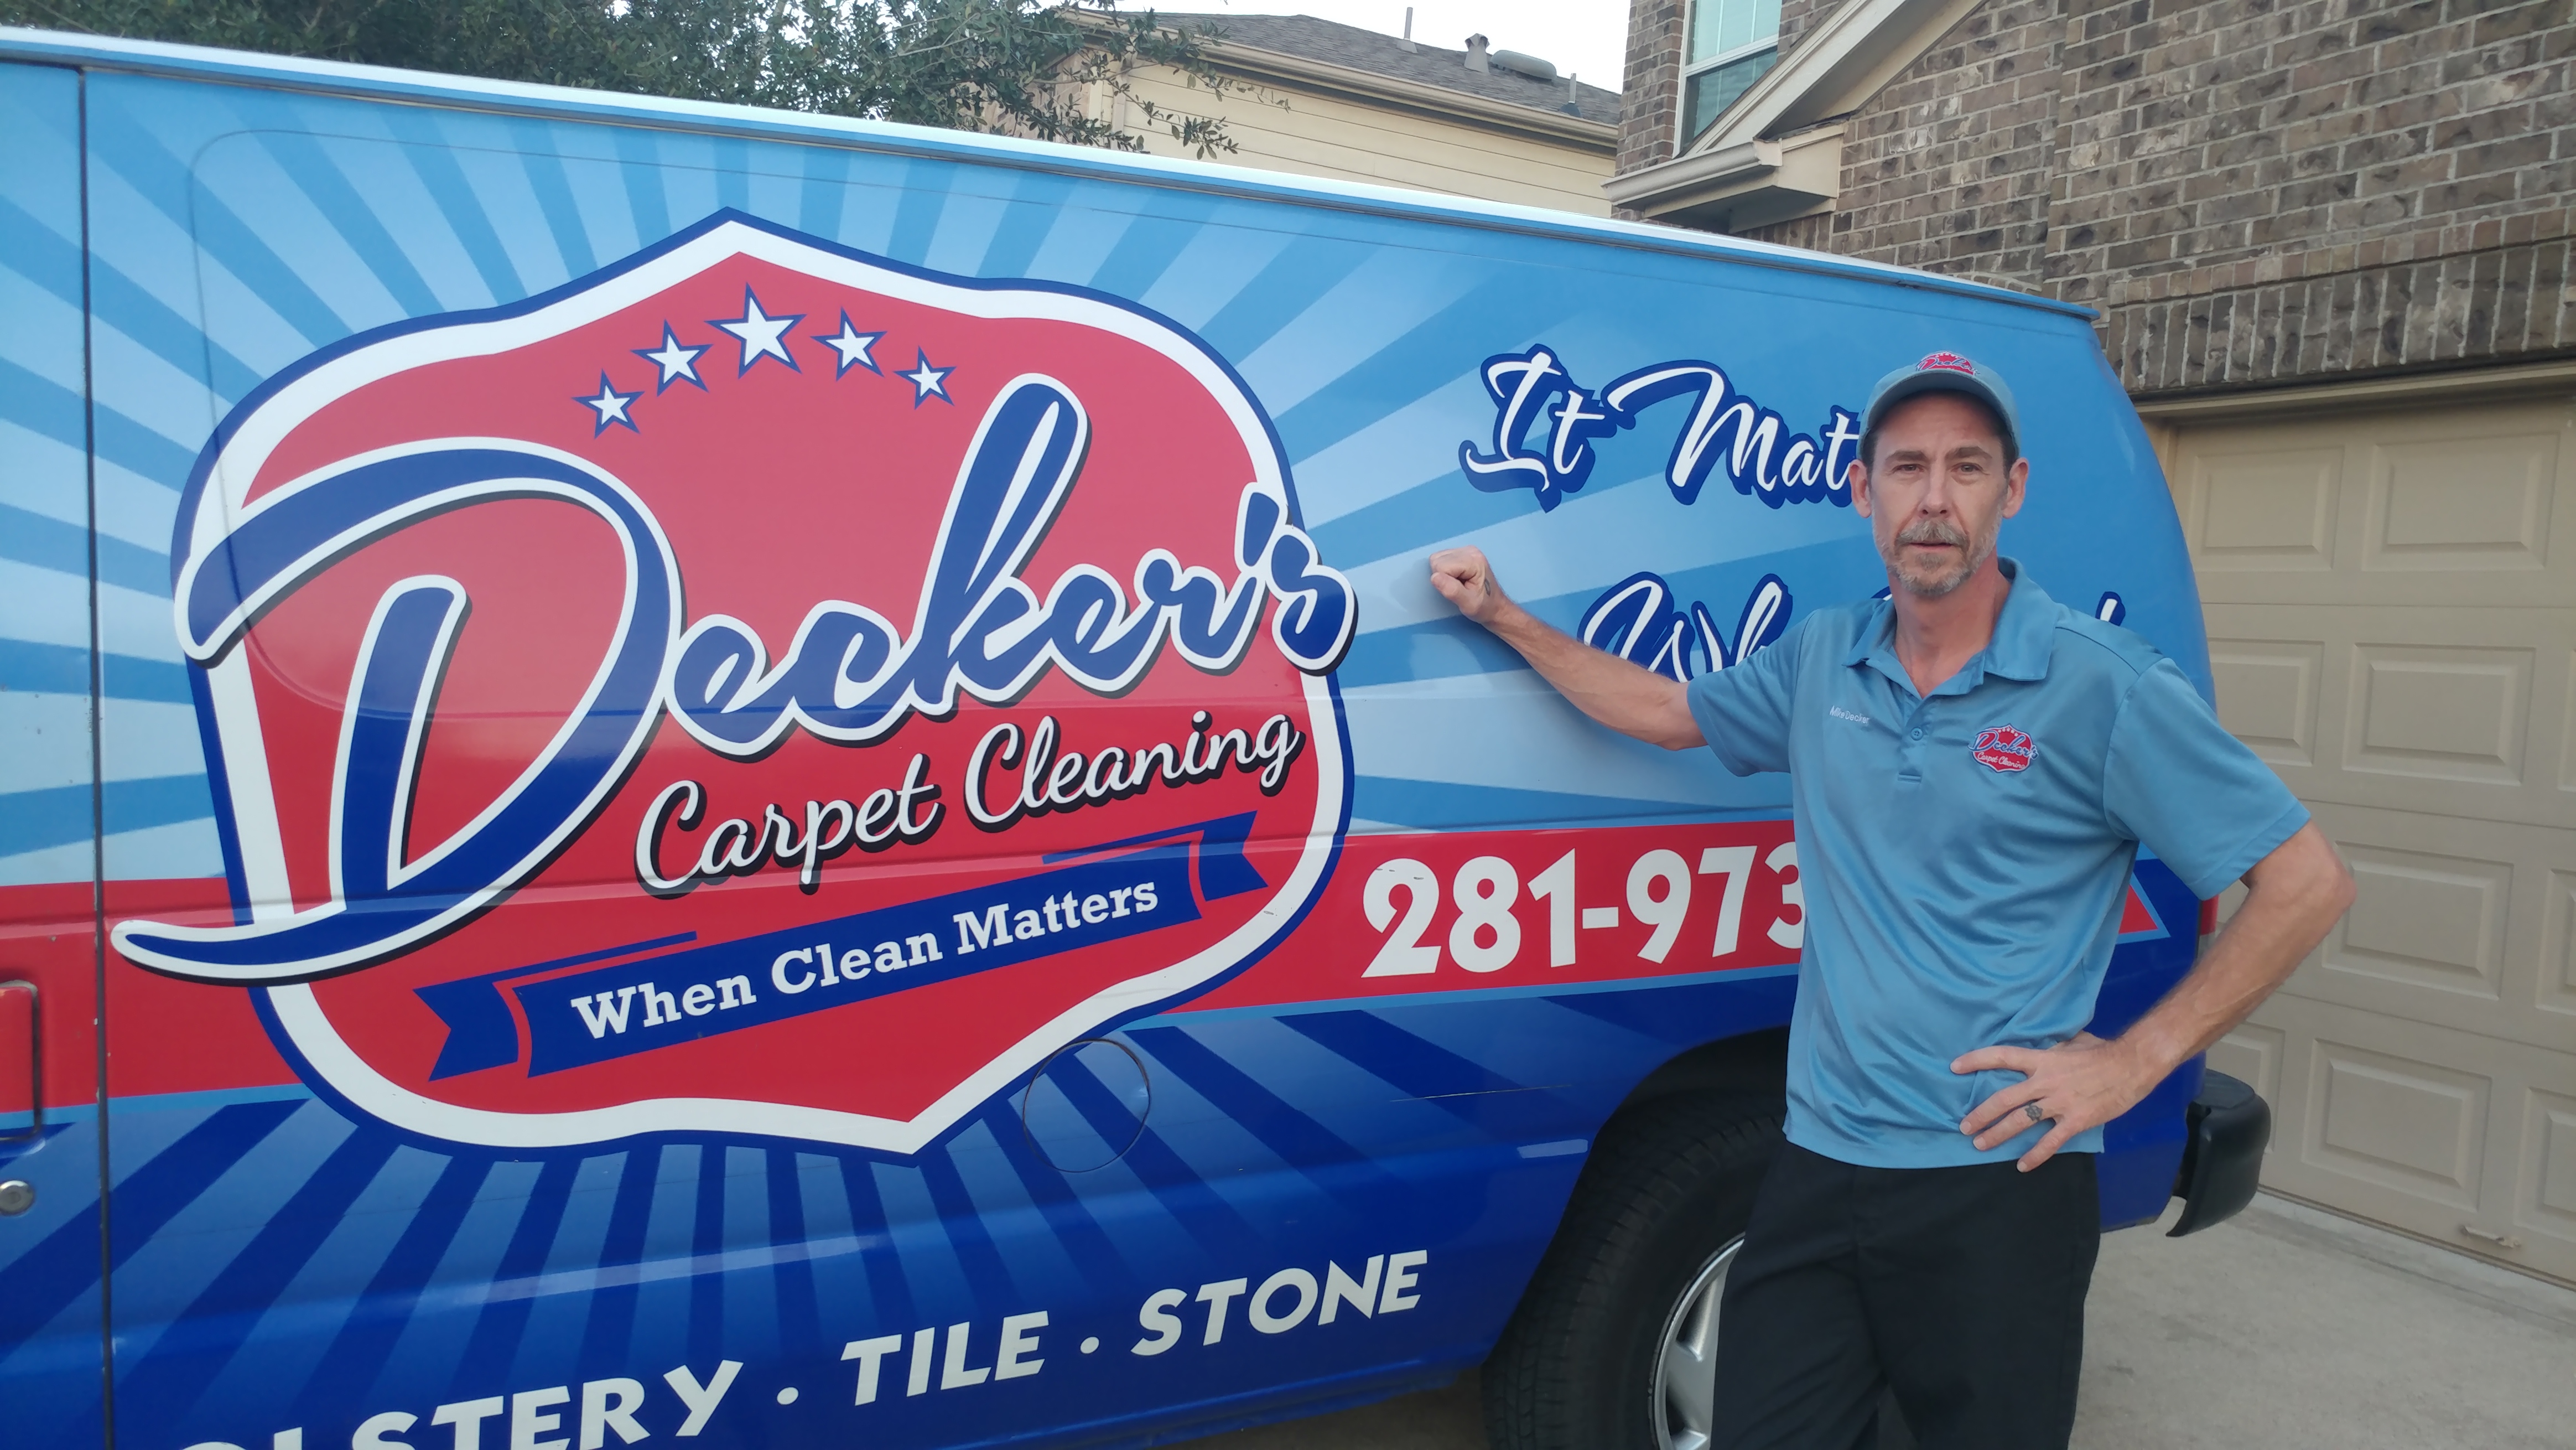 Mike Decker standing with Deckers Carpet Cleaning Van